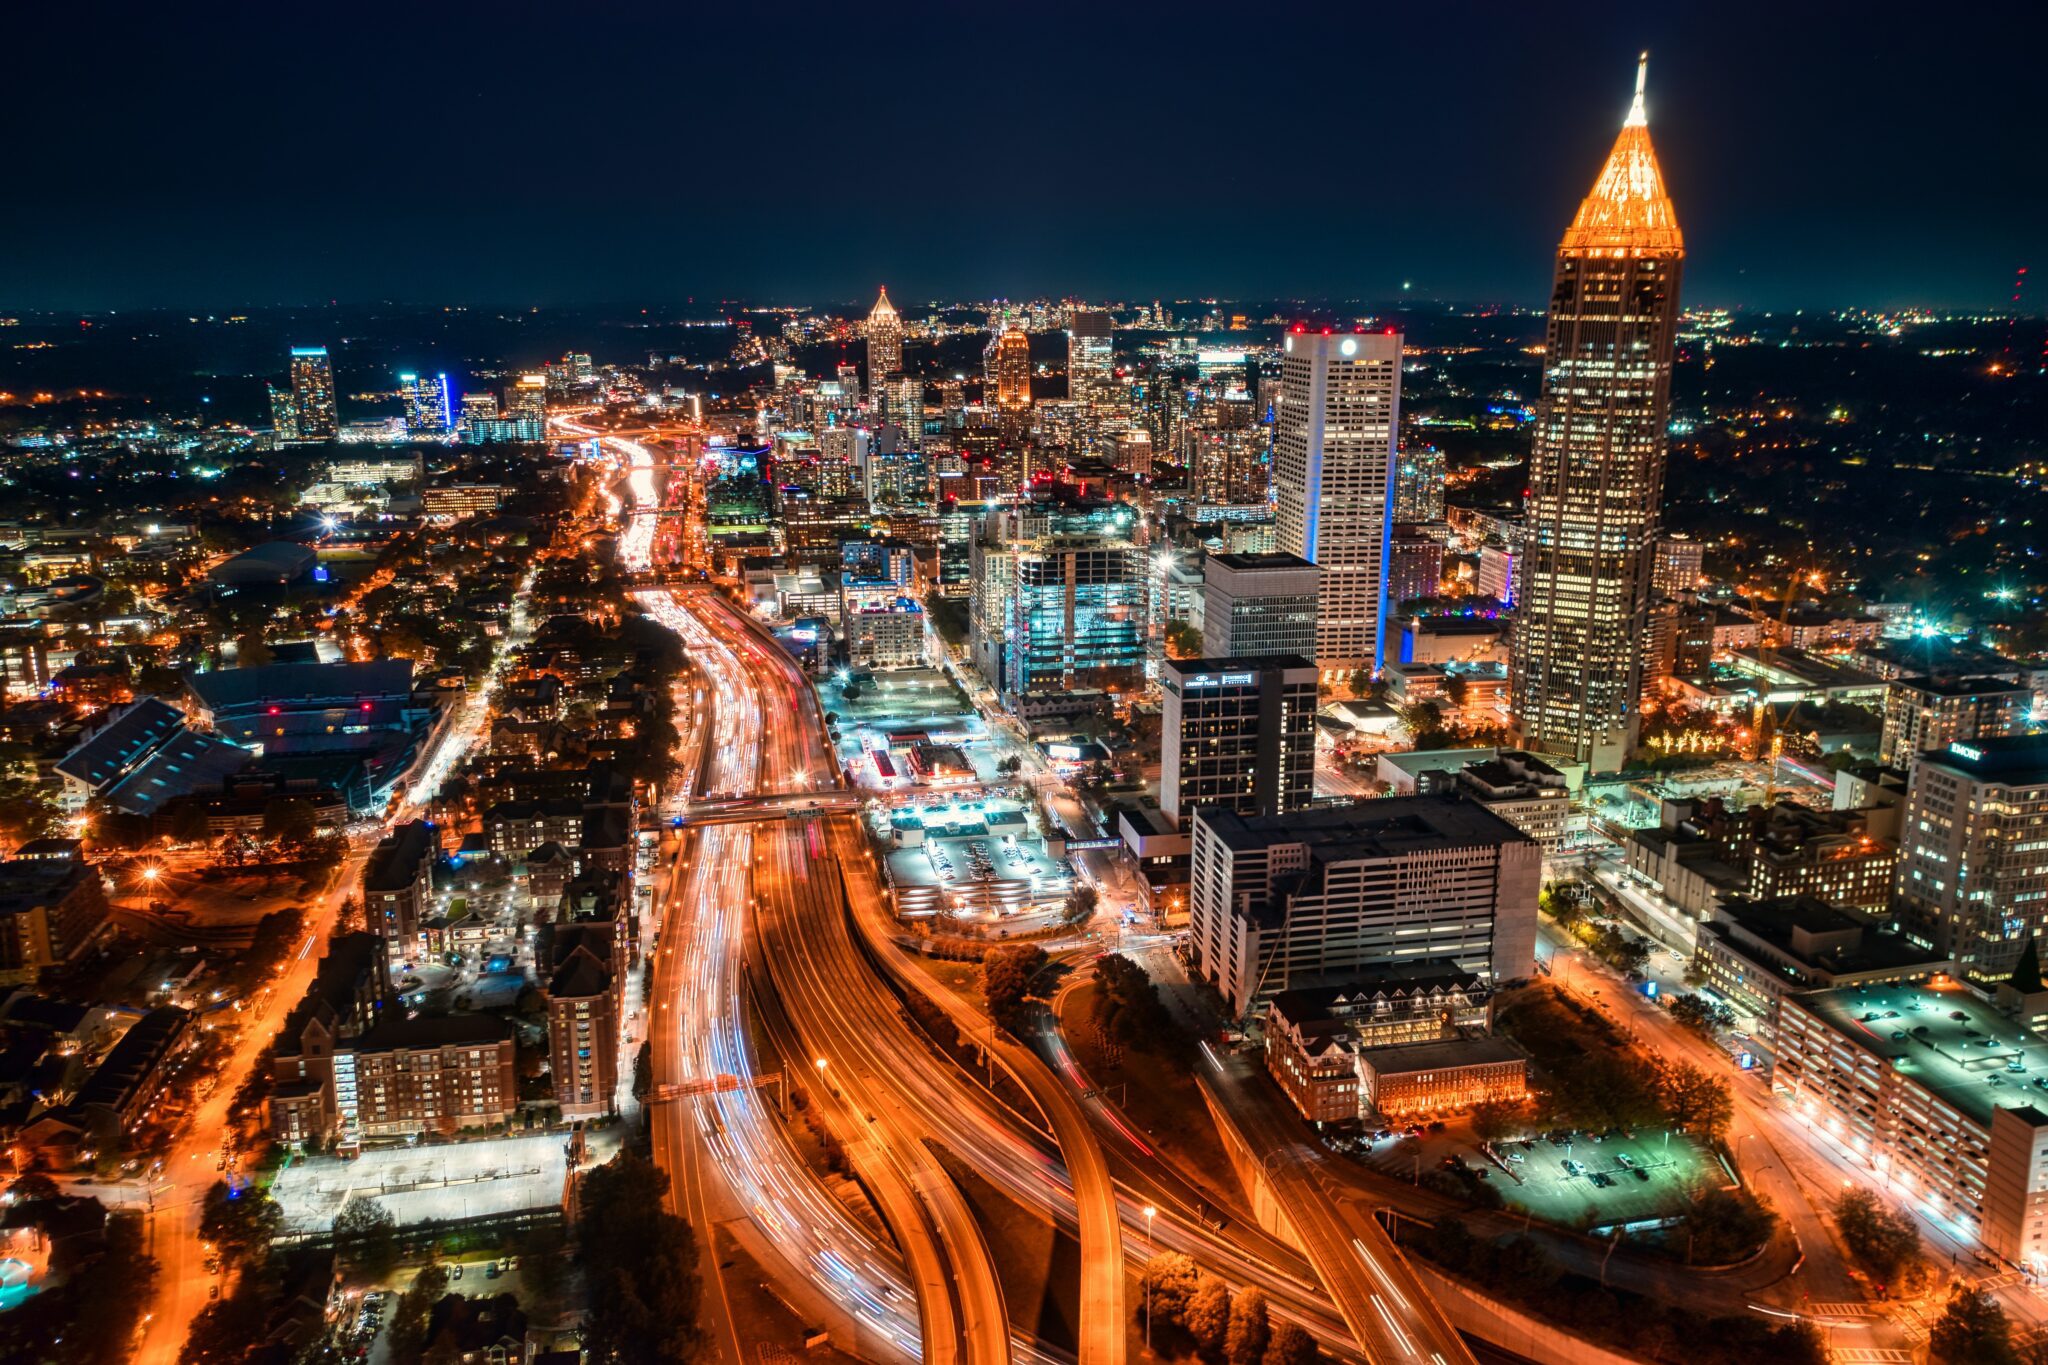 The Atlanta skyline at night